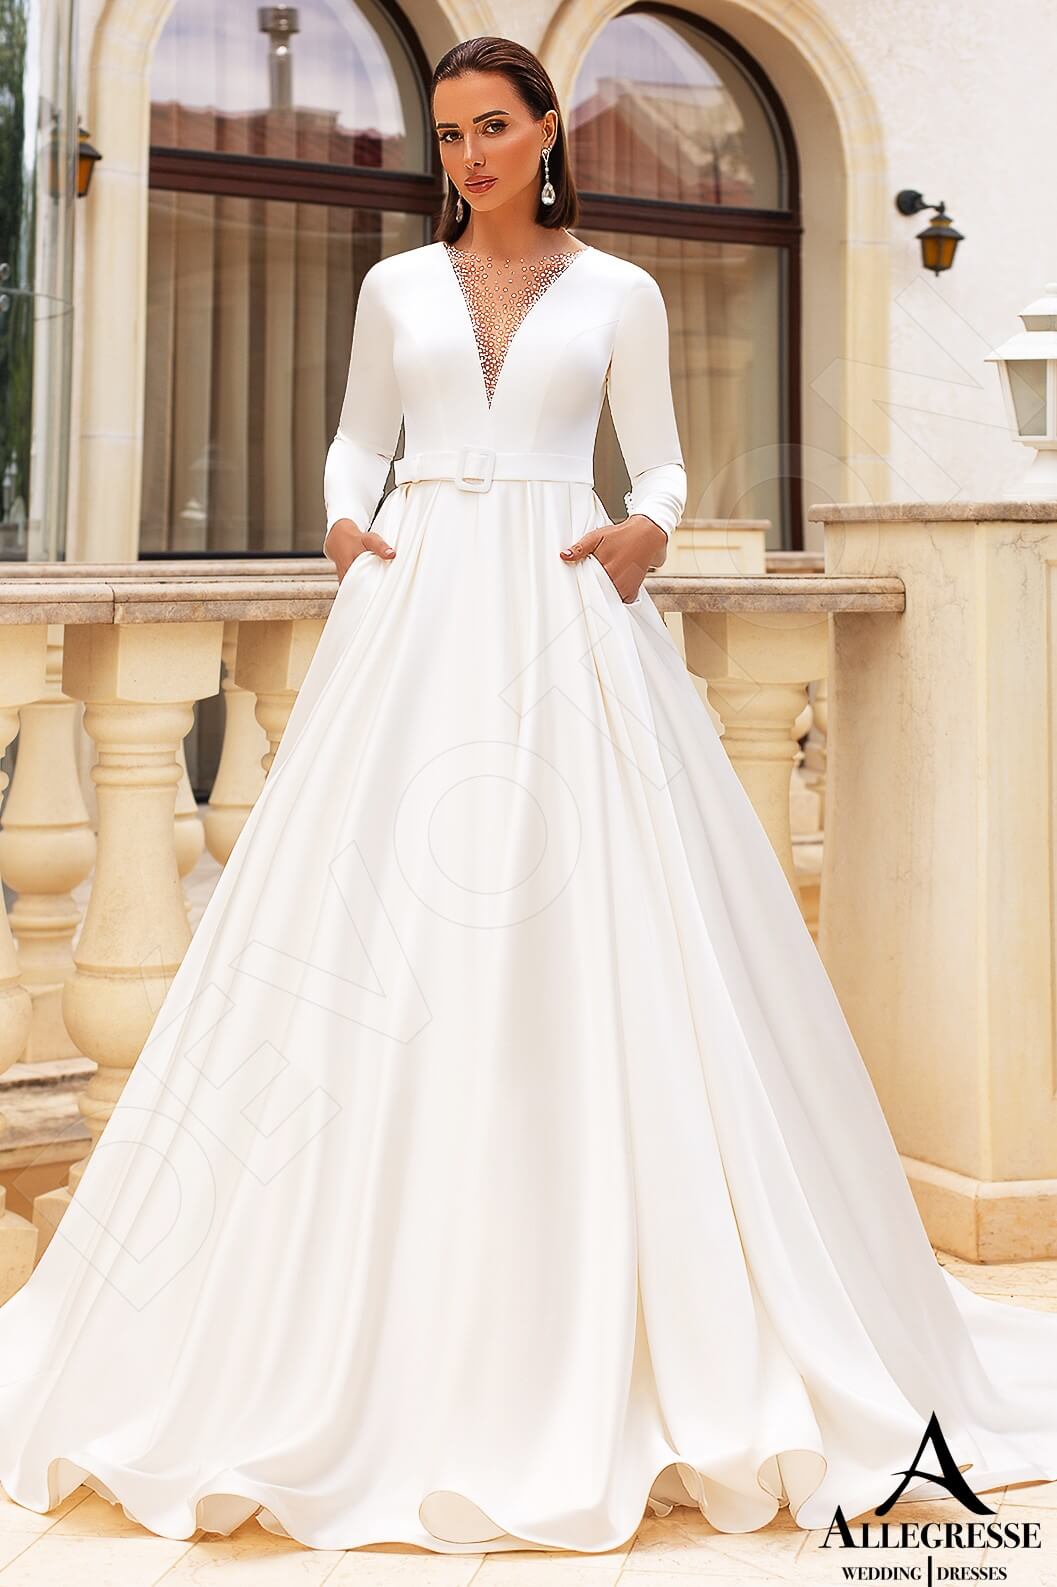 Volettina Illusion back Princess/Ball Gown Long sleeve Wedding Dress Front